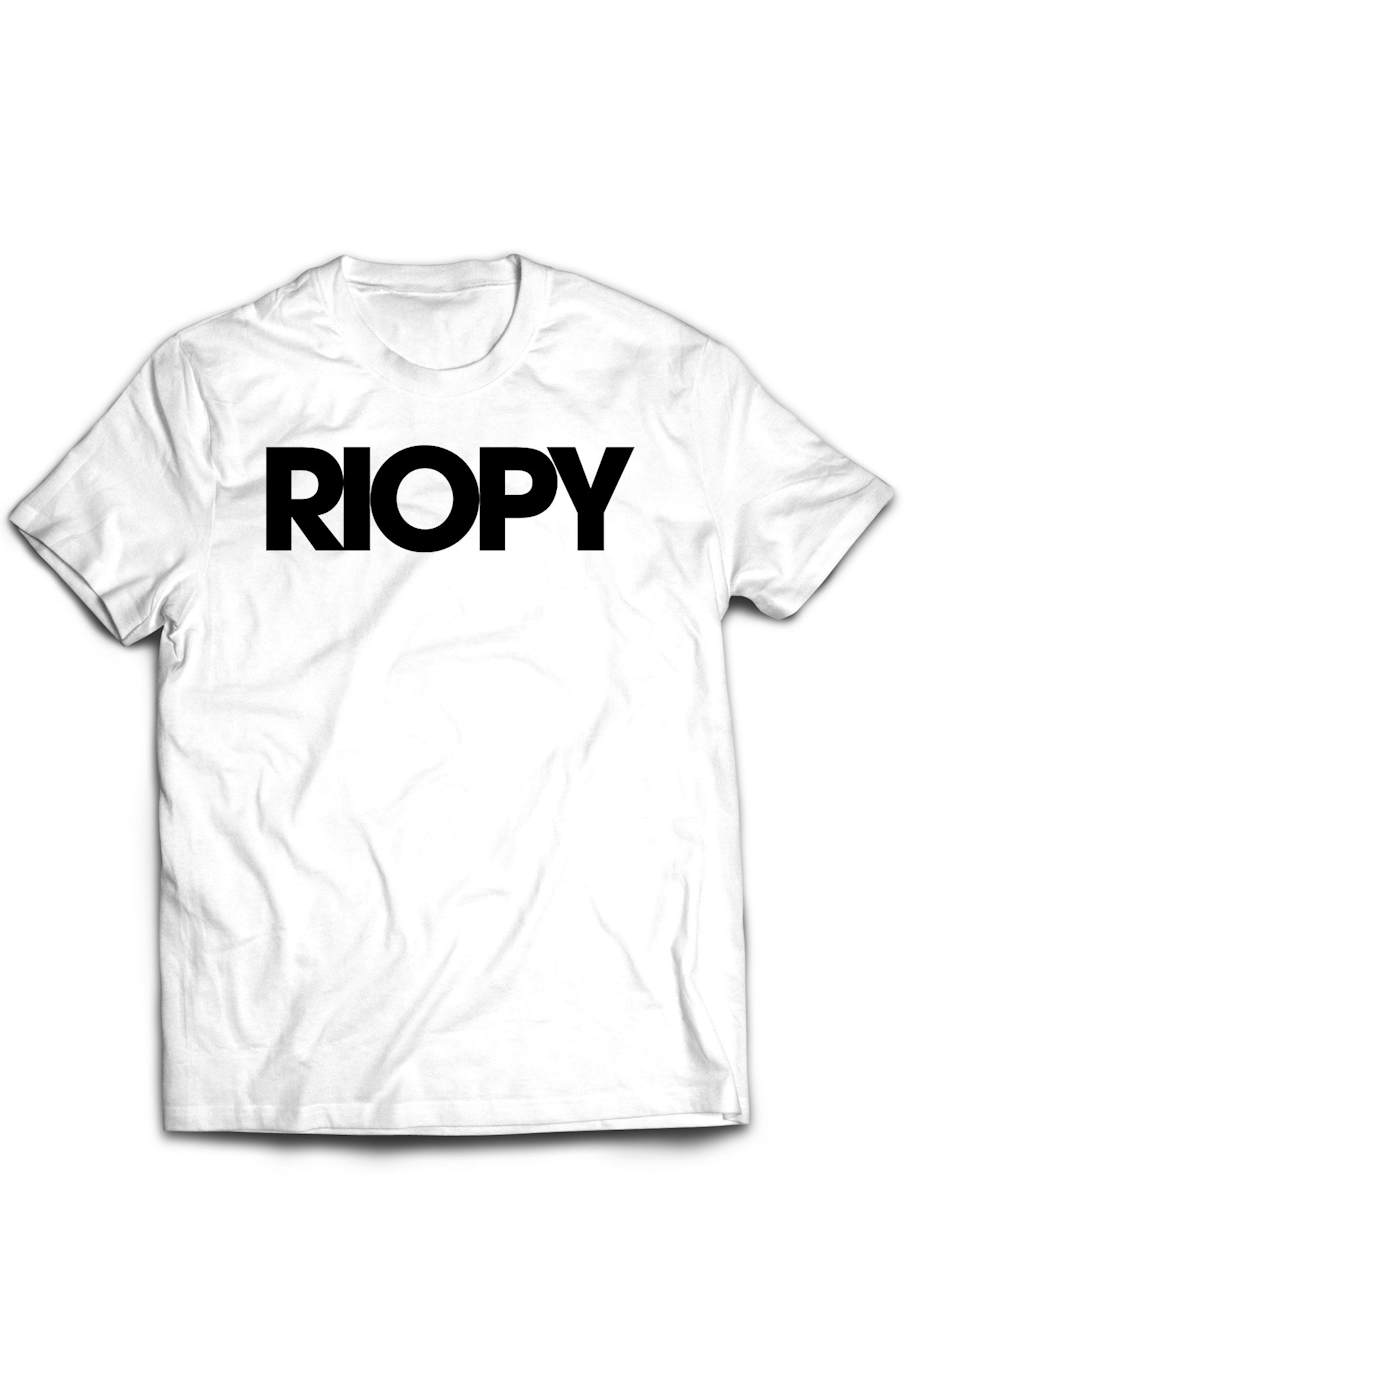 RIOPY (T-shirt)